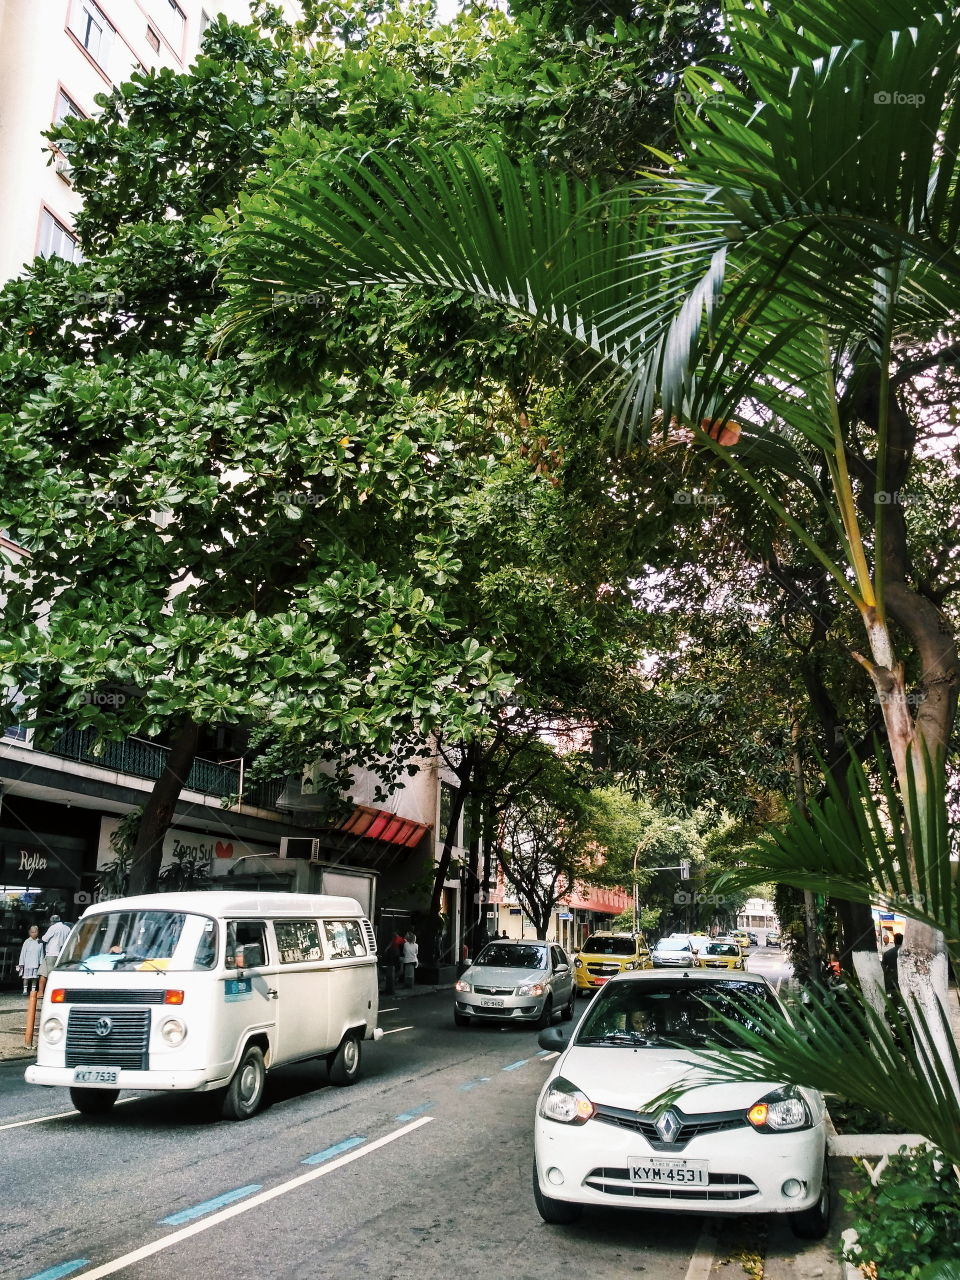 Brazilian streets